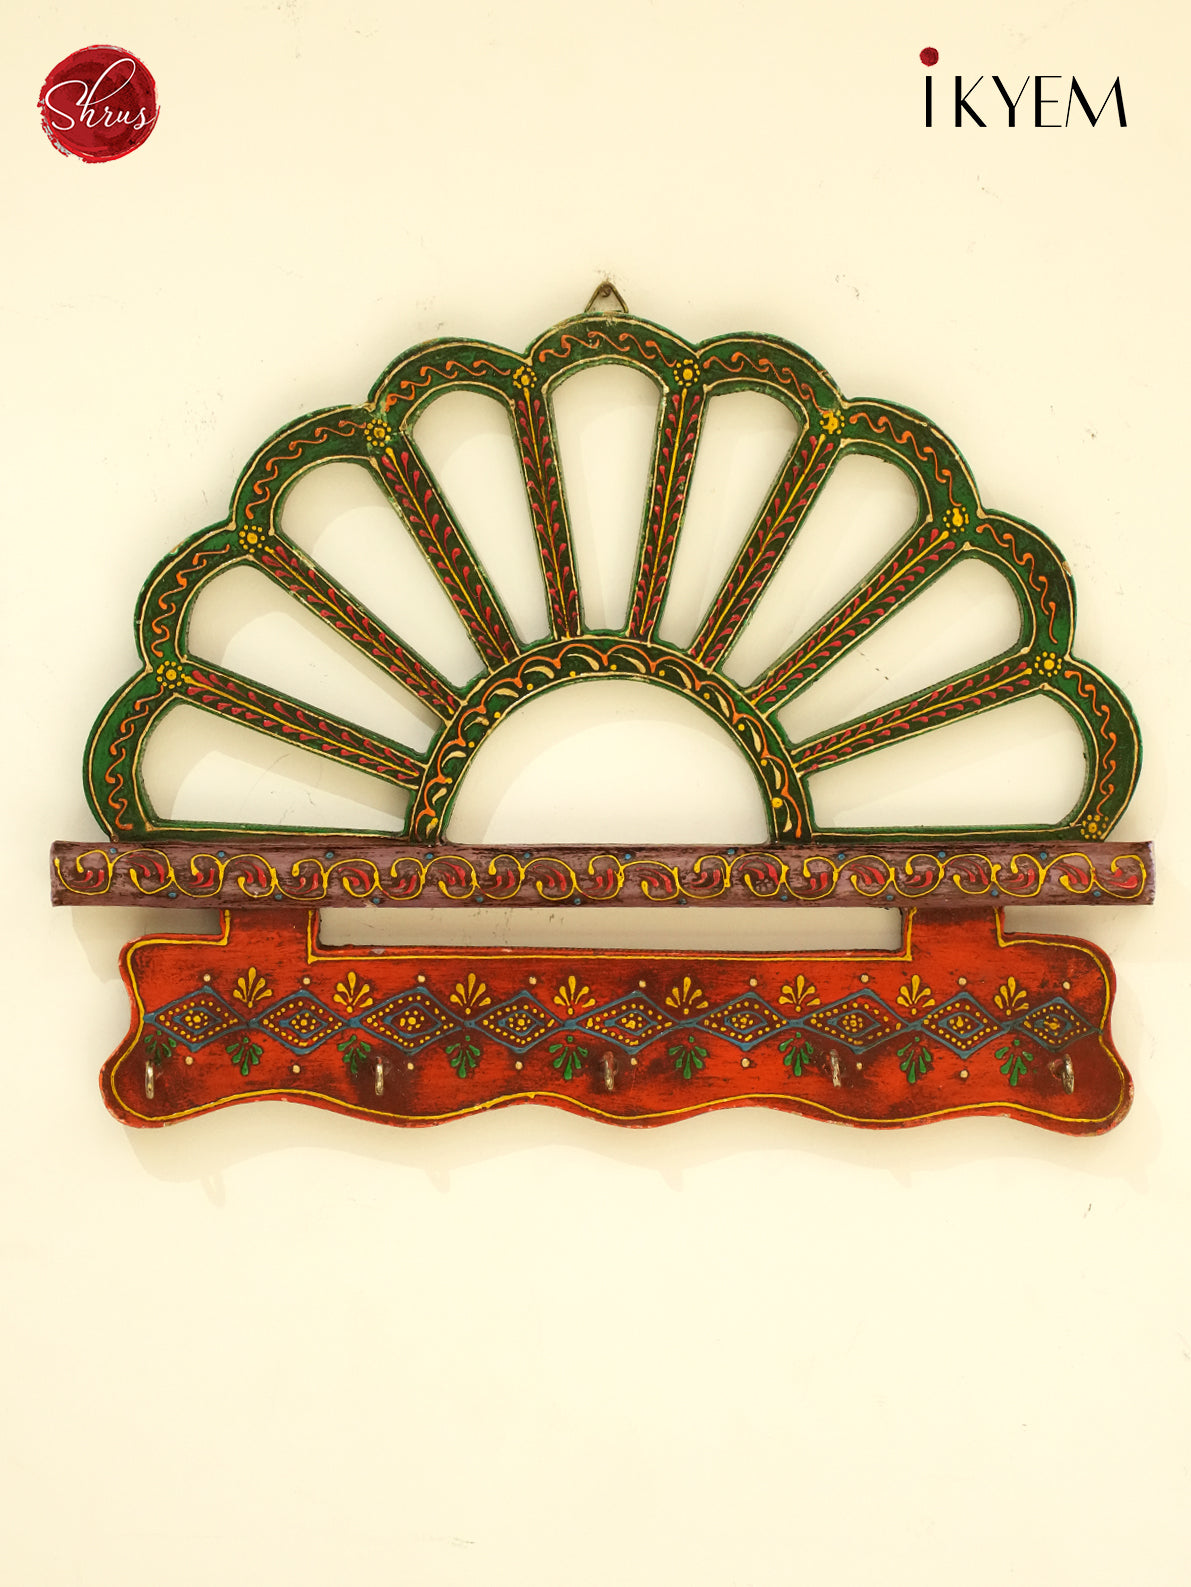 Wooden handpainted key holder